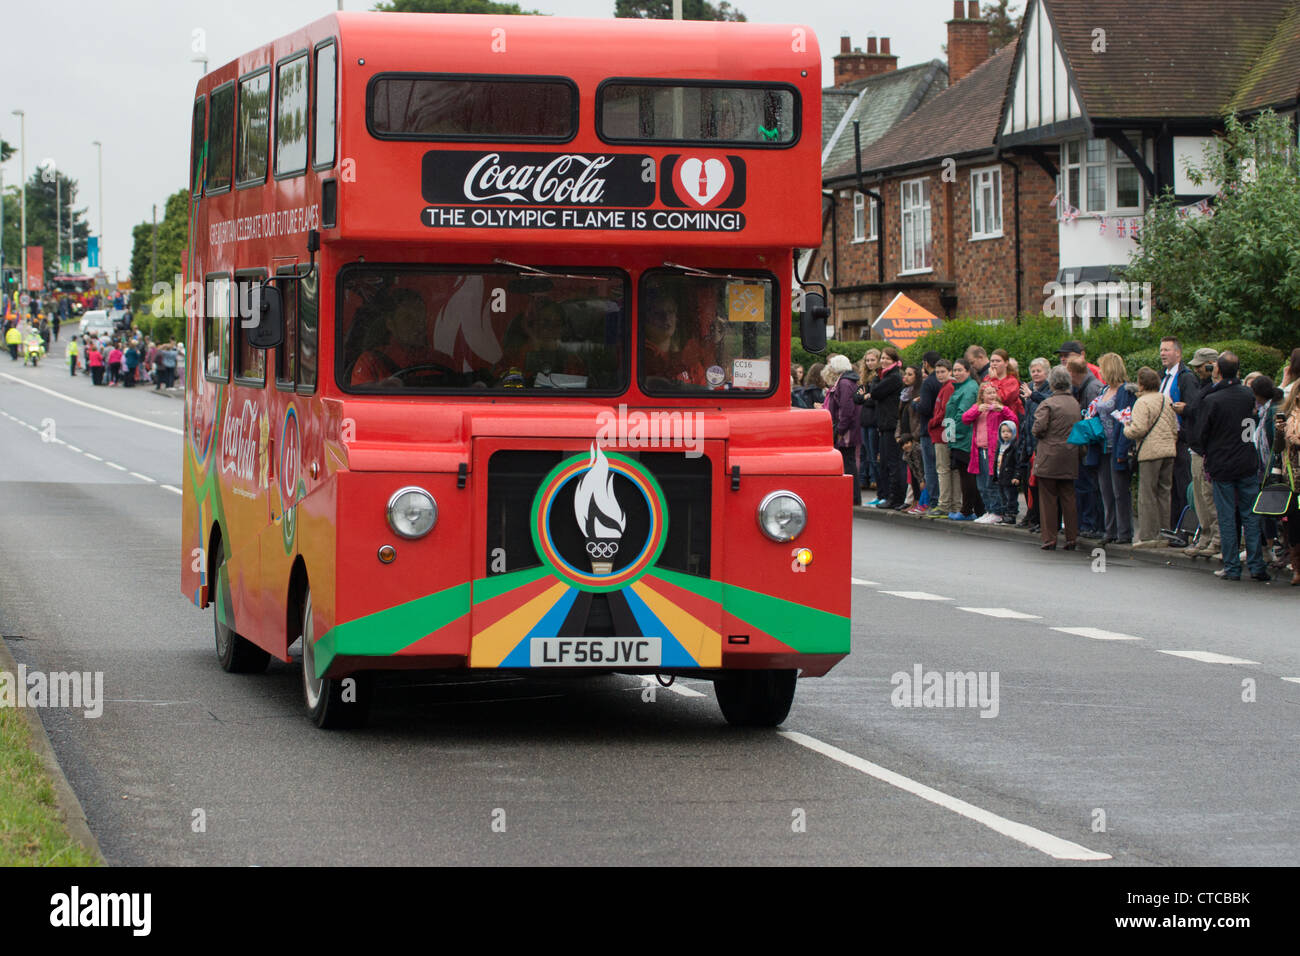 Coca-Cola, sponsor de l'relais olympique, A6,Oadby, Leicester Banque D'Images